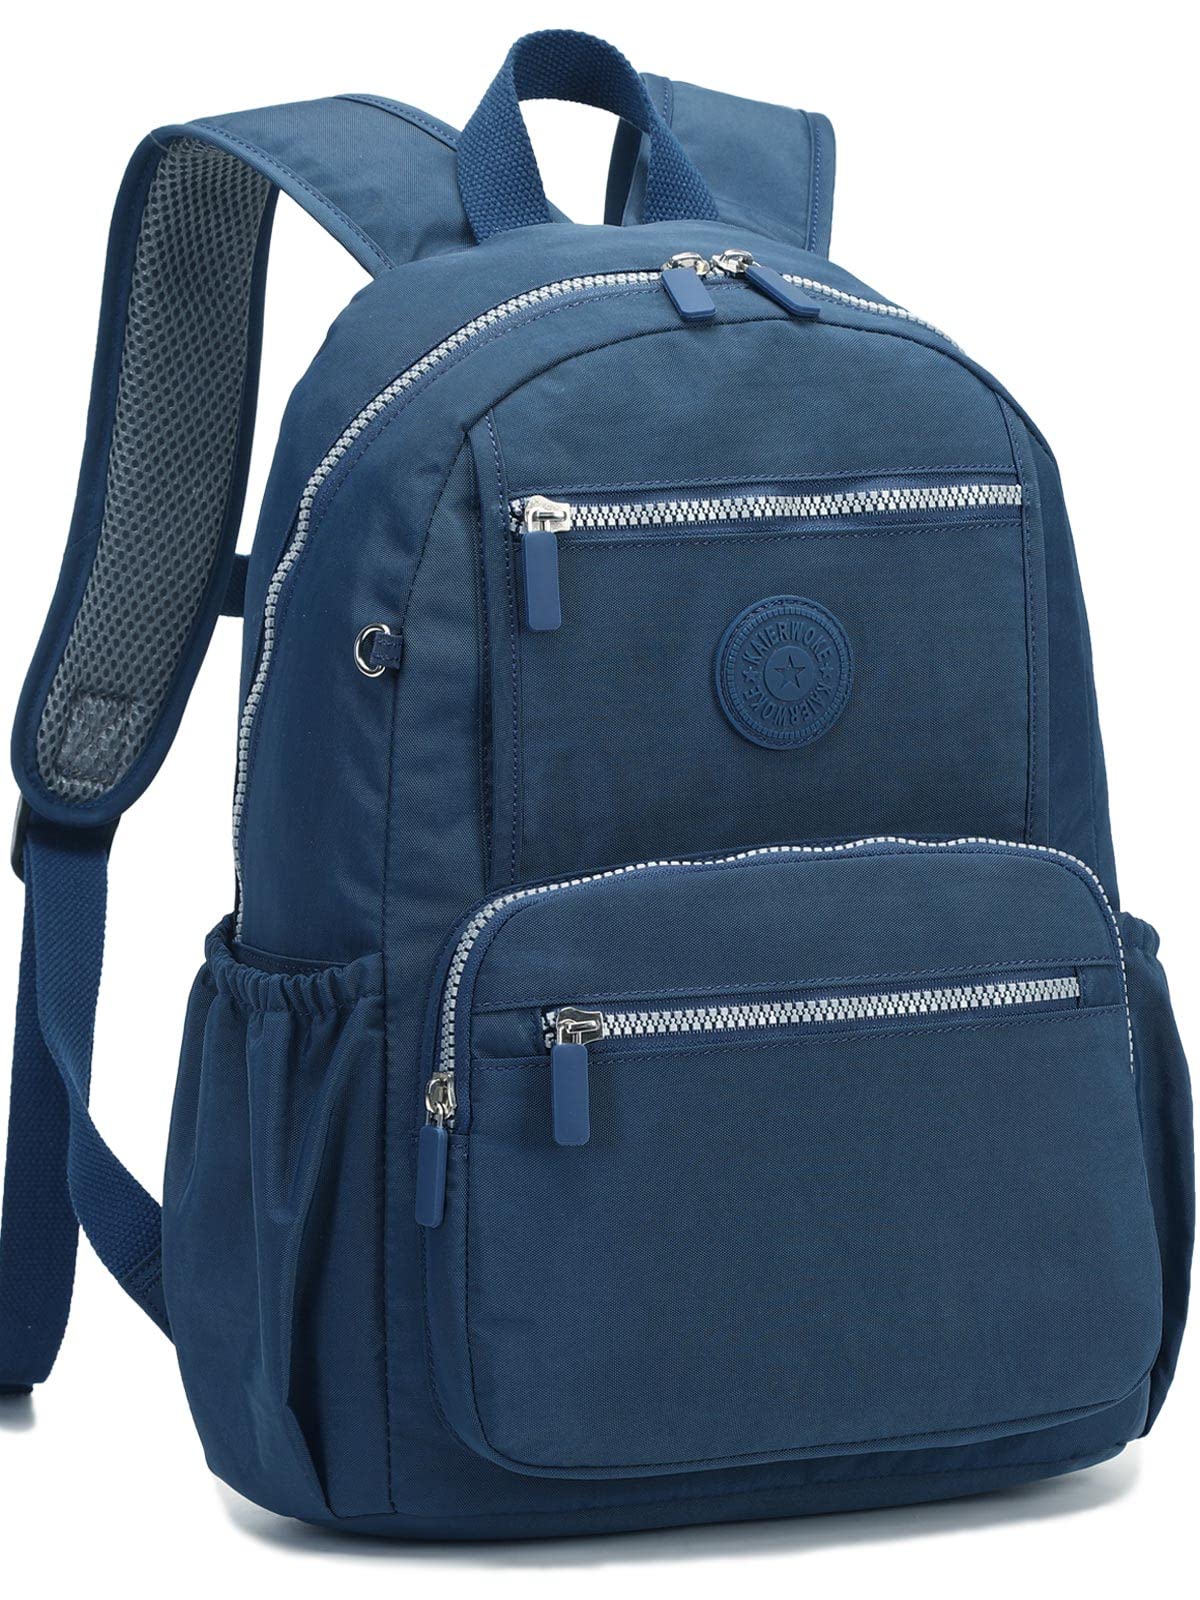 KAIERWOKE Small Nylon Backpack Casual Lightweight Daypack Backpacks for Women (Navy blue)